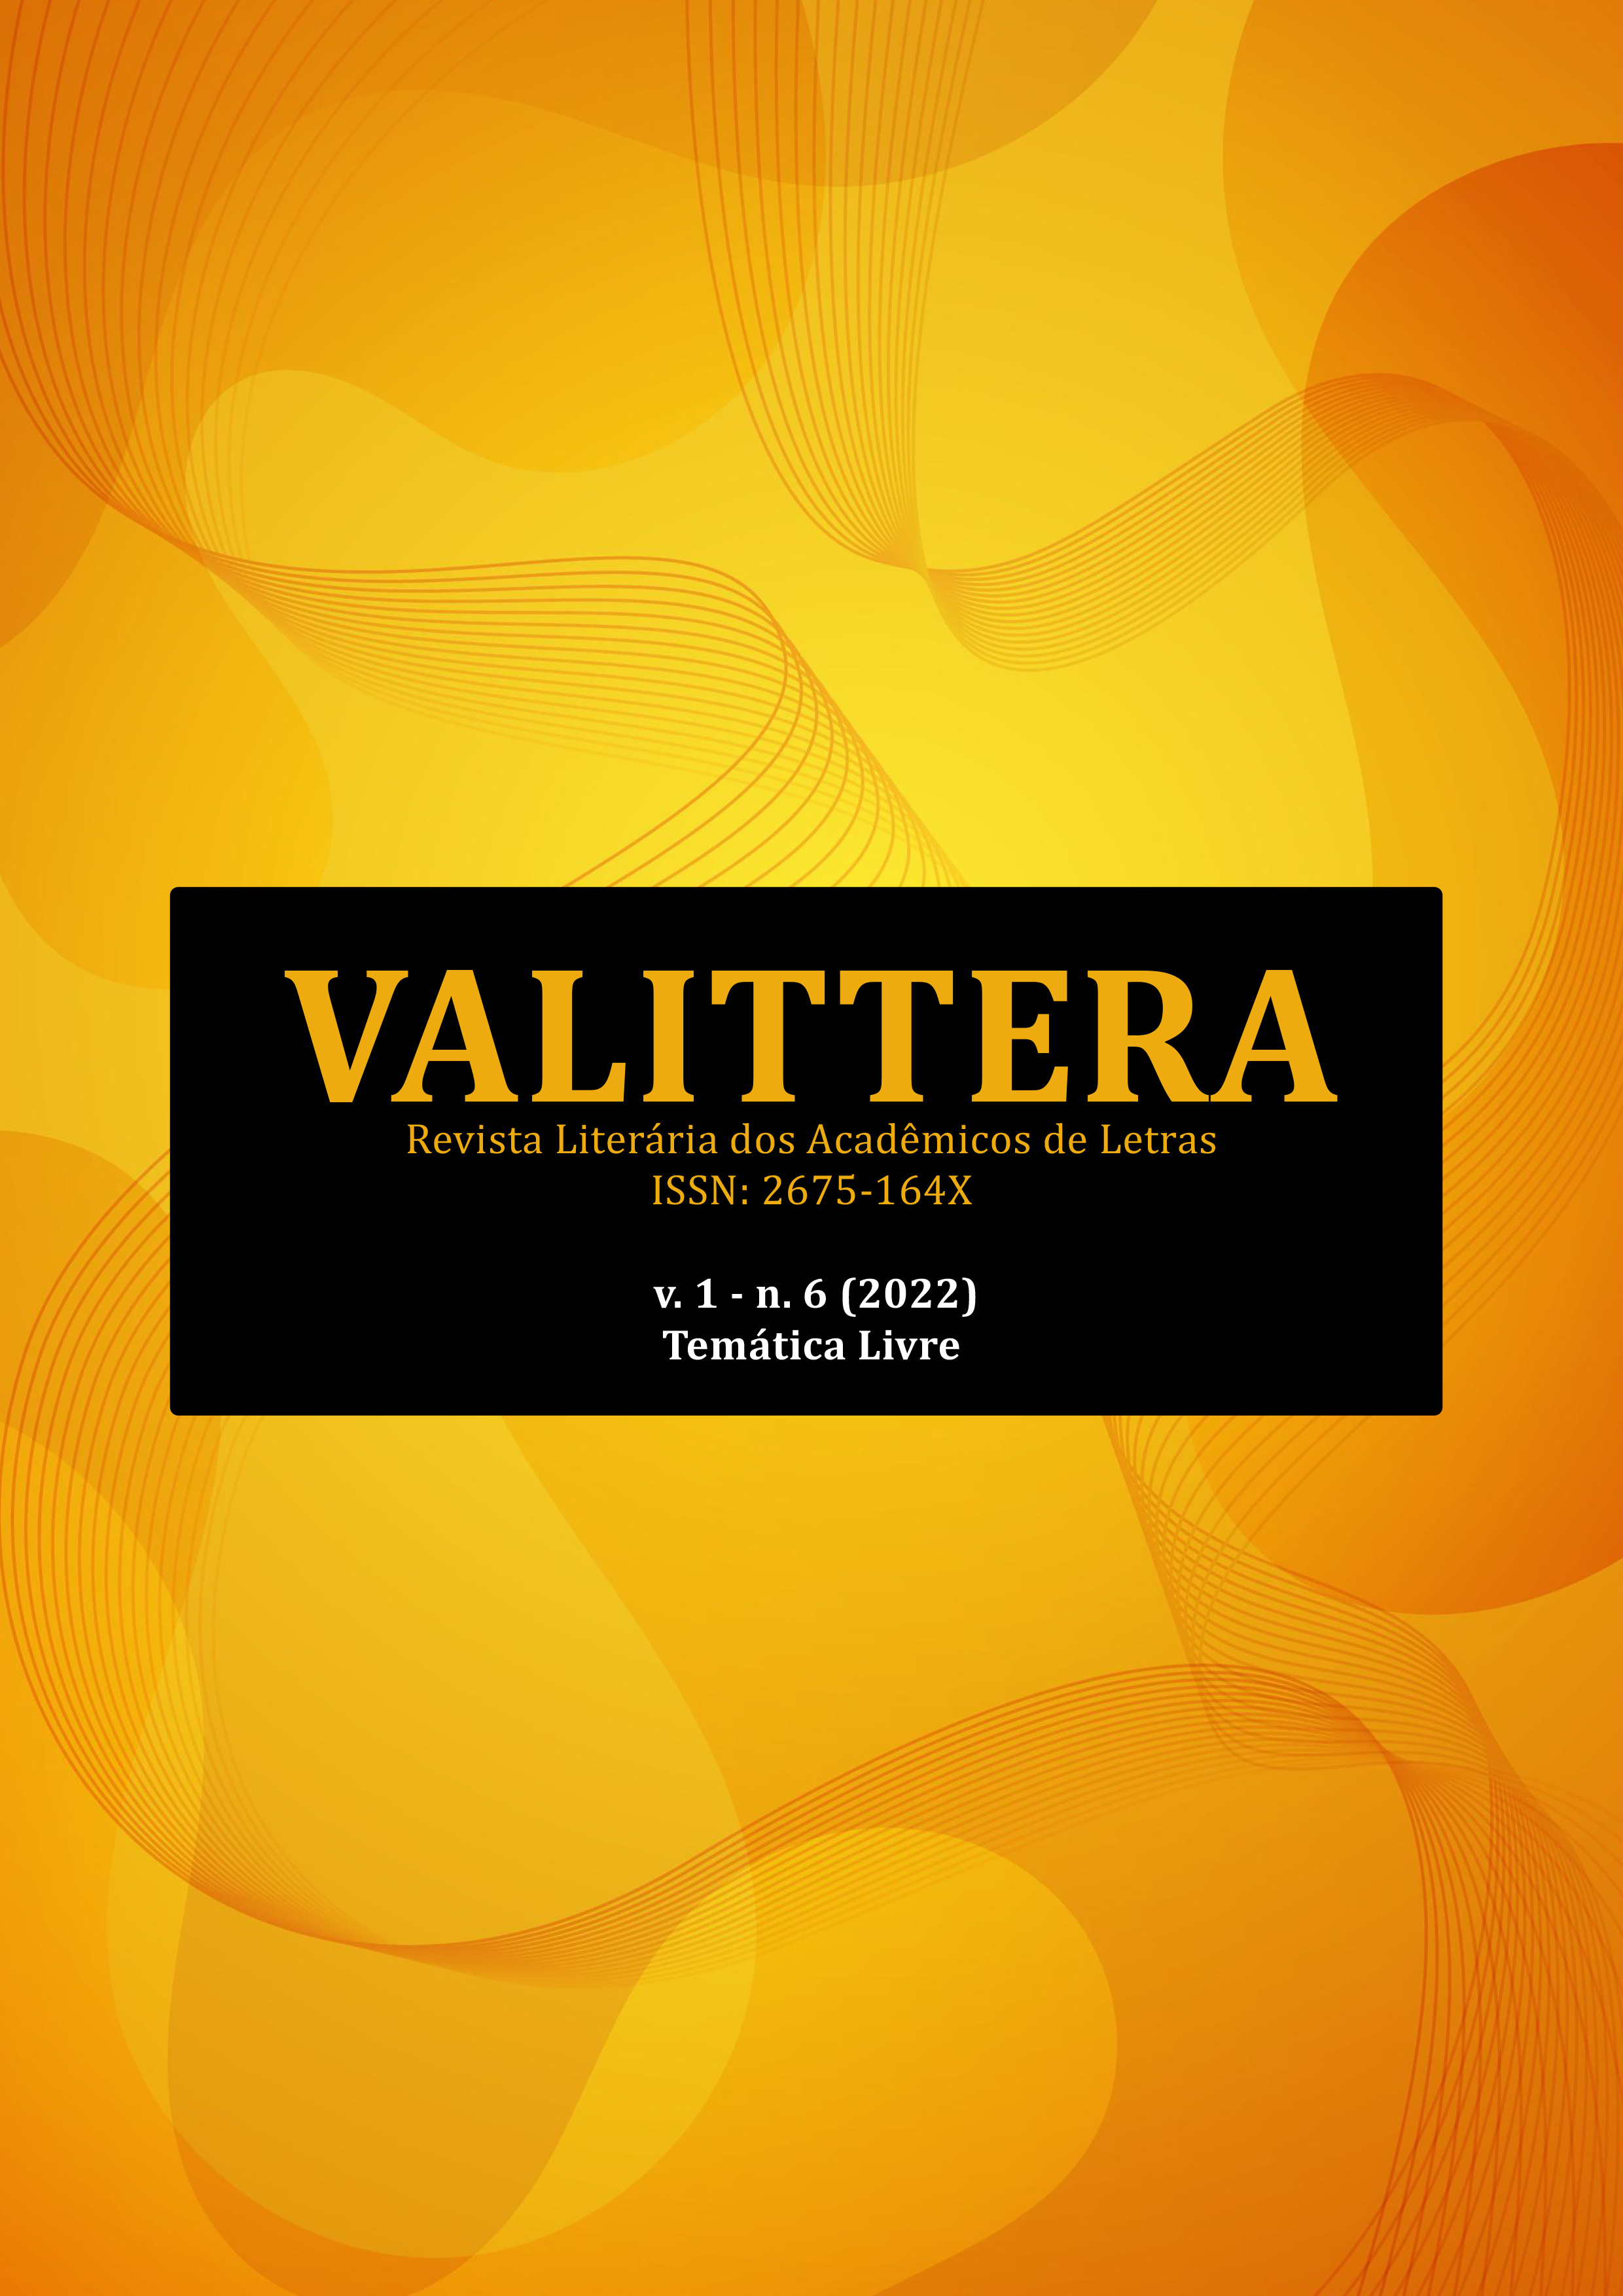 					View Vol. 1 No. 6 (2022): VALITTERA - TEXTOS LIVRES
				